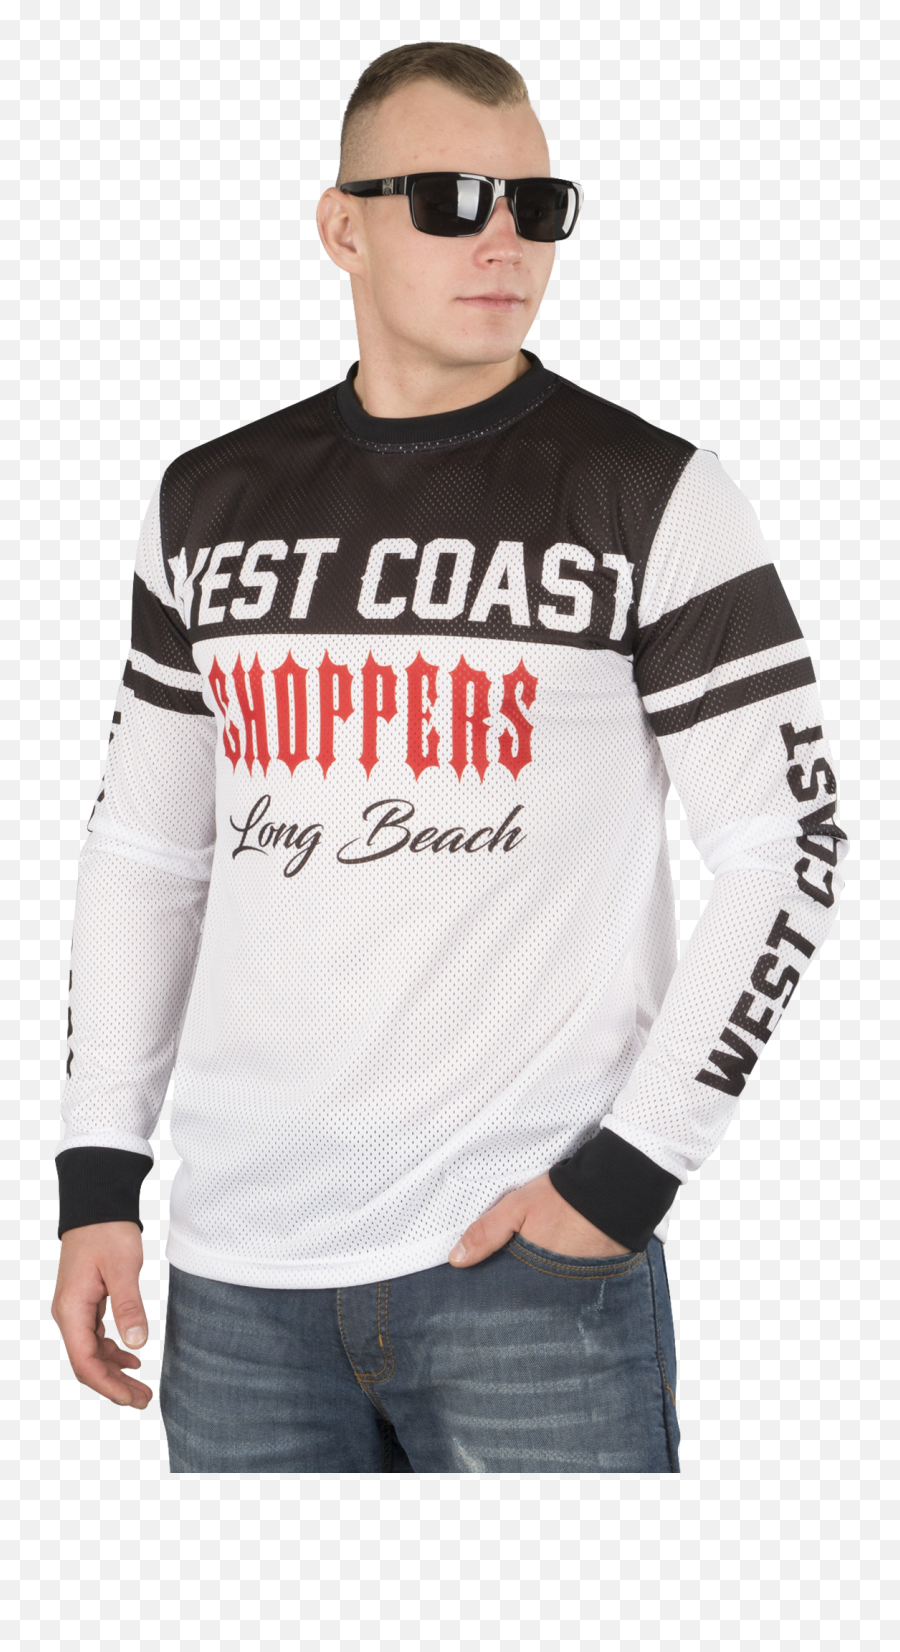 West Coast Choppers Og Mesh T - Long Sleeve Png,Westcoast Choppers Logo